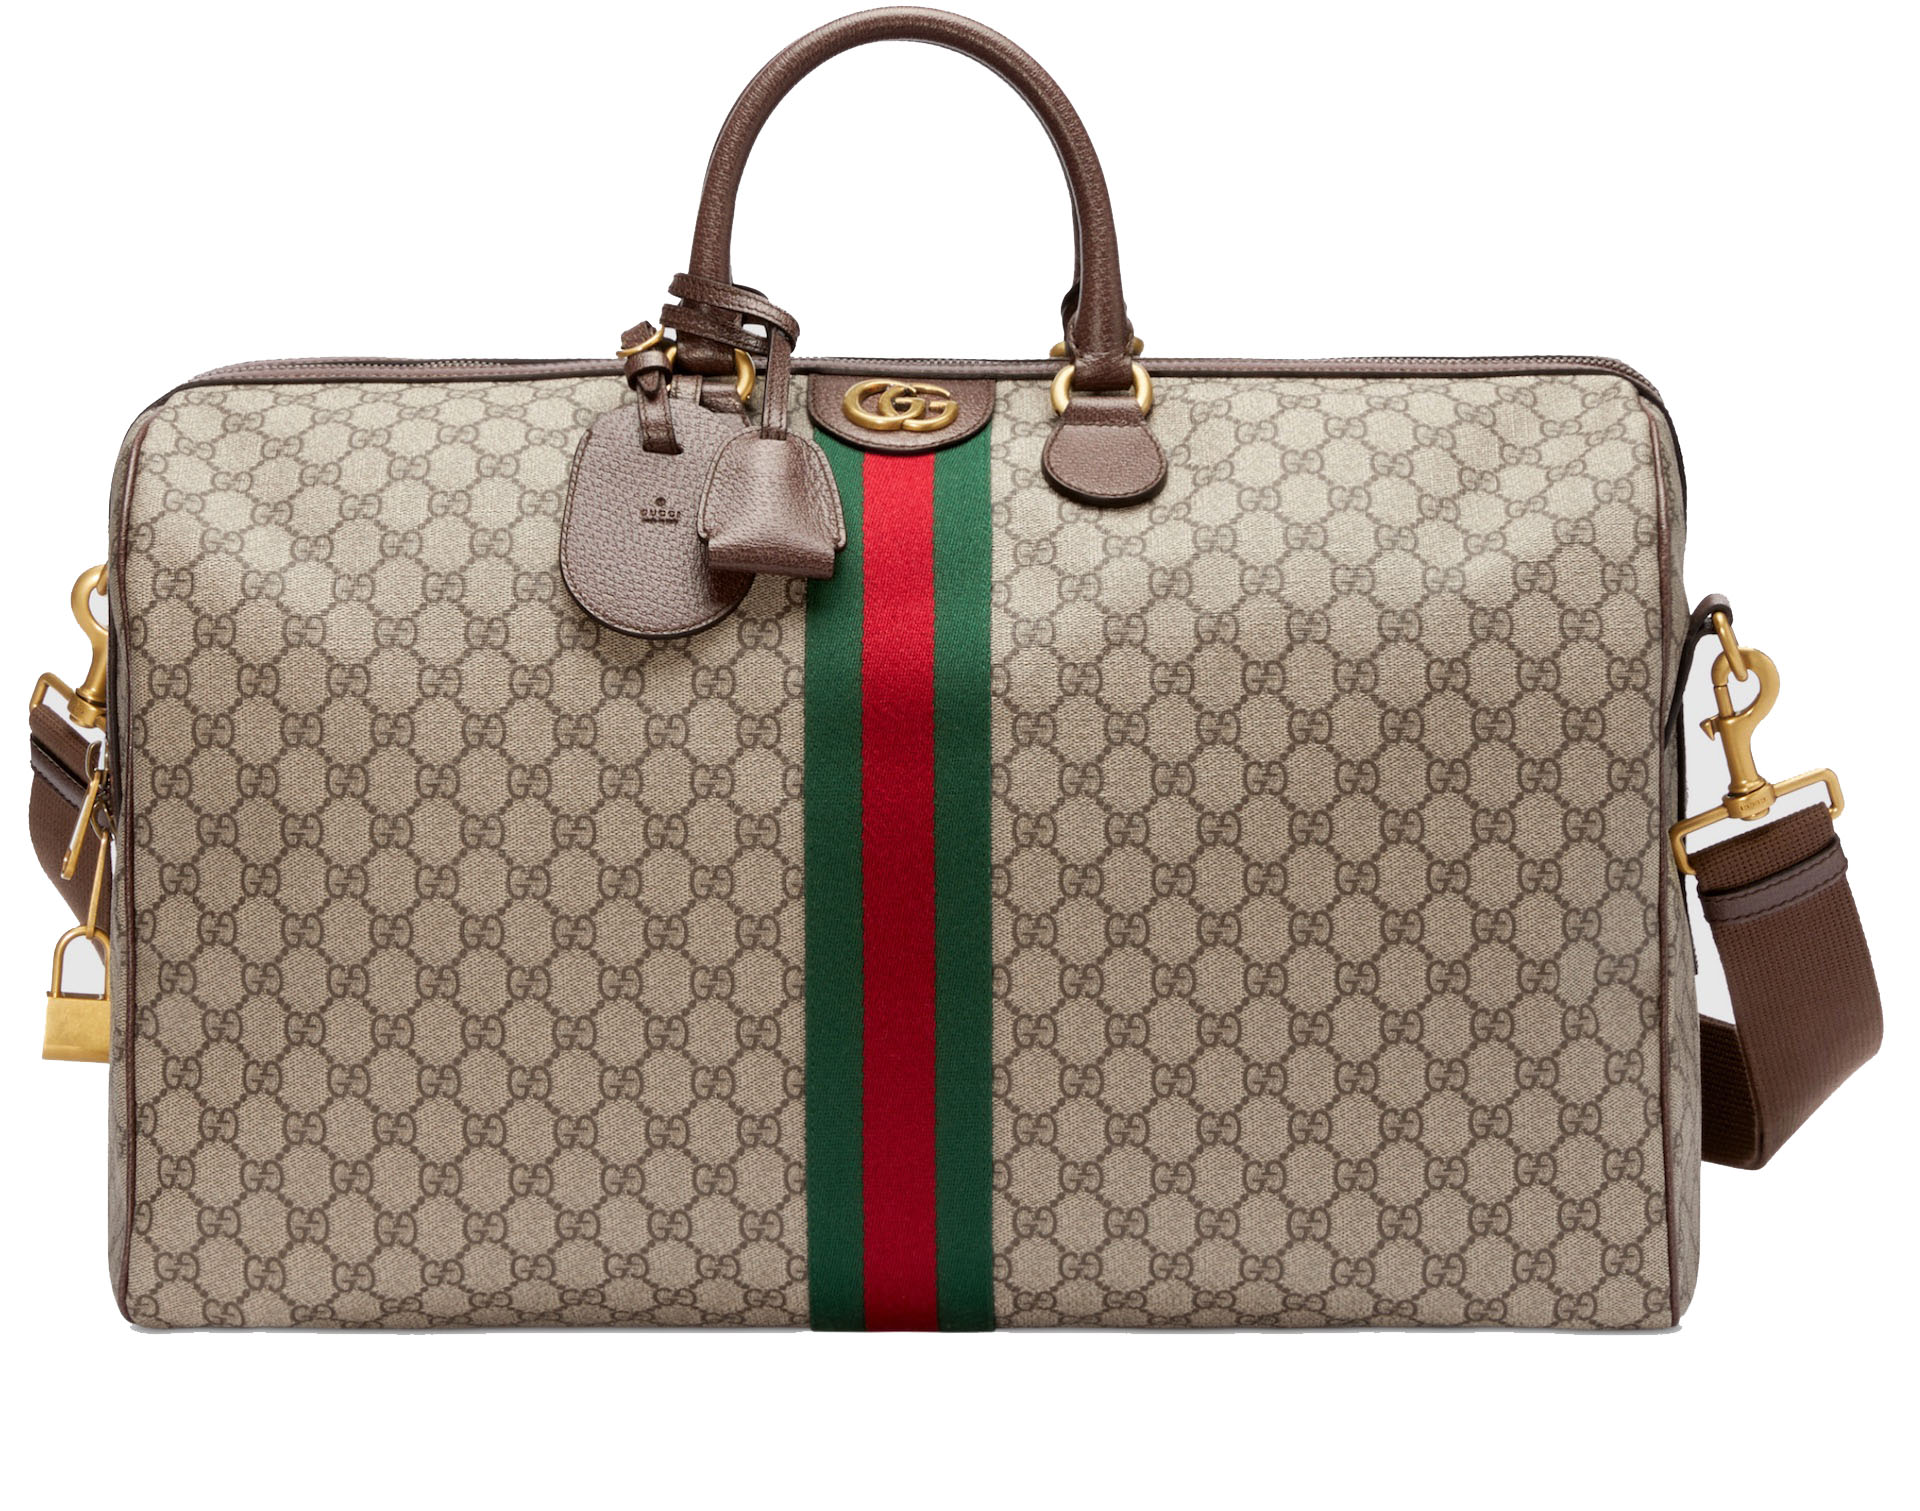 Gucci Ophidia duffel bag